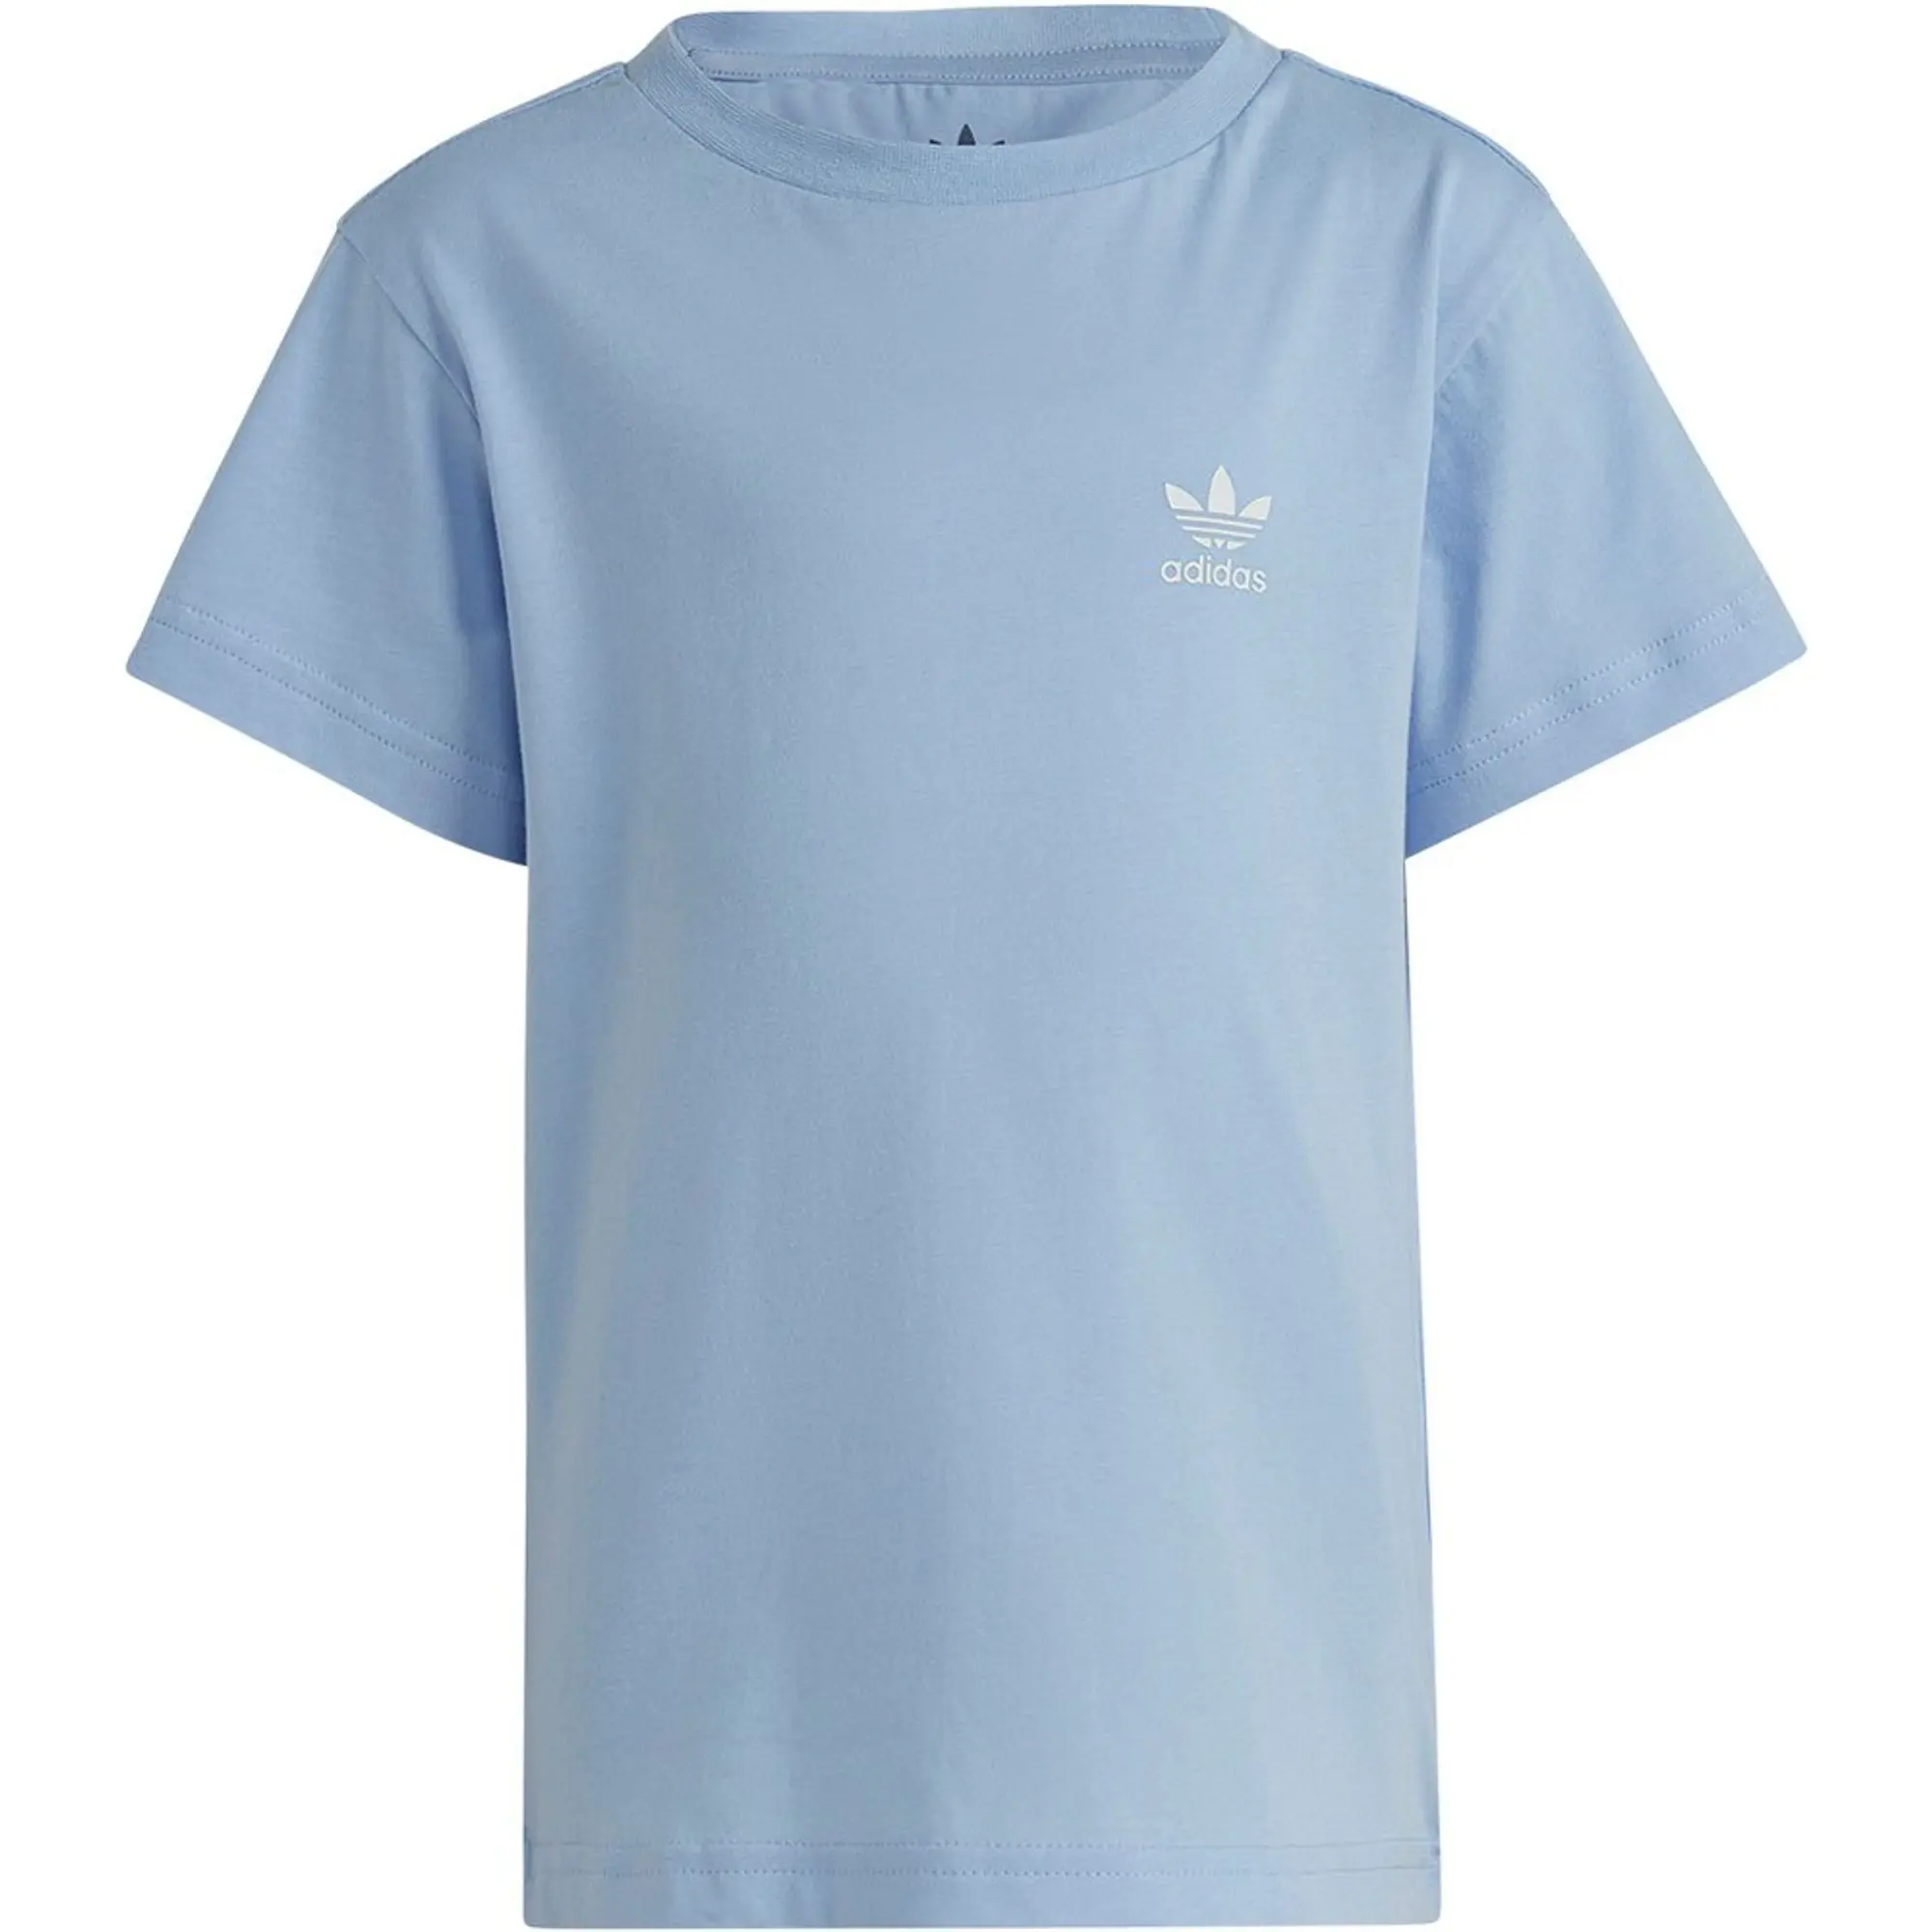 IB9905 Originals - Adidas | Adicolor Kids T-Shirt Blue